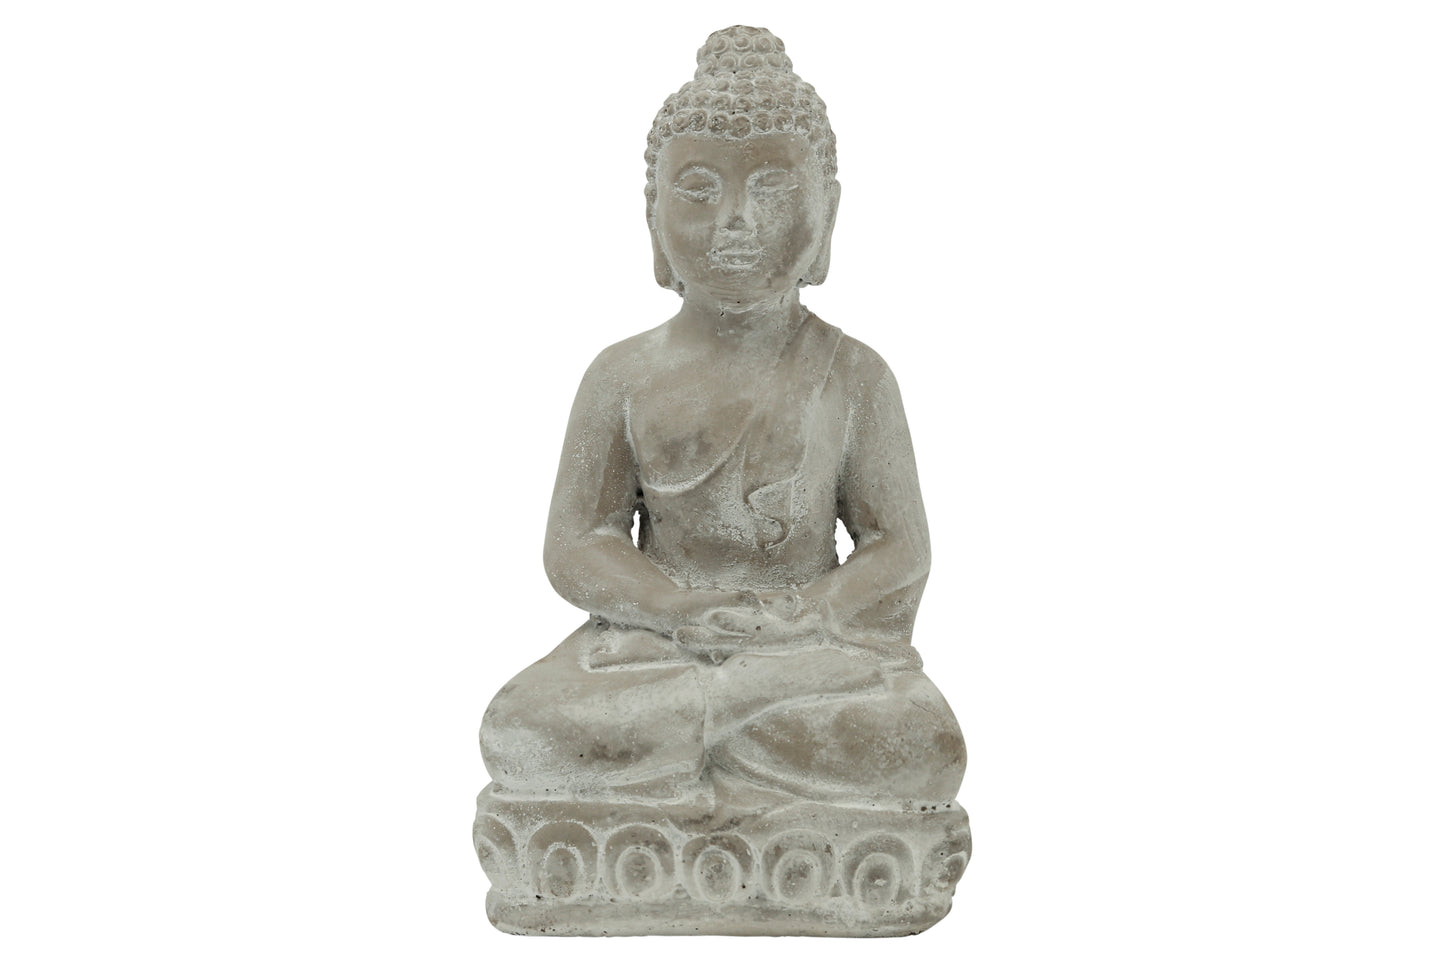 12" Cement Sitting Buddha Figurine in Dhyana Mudra Meditating Position